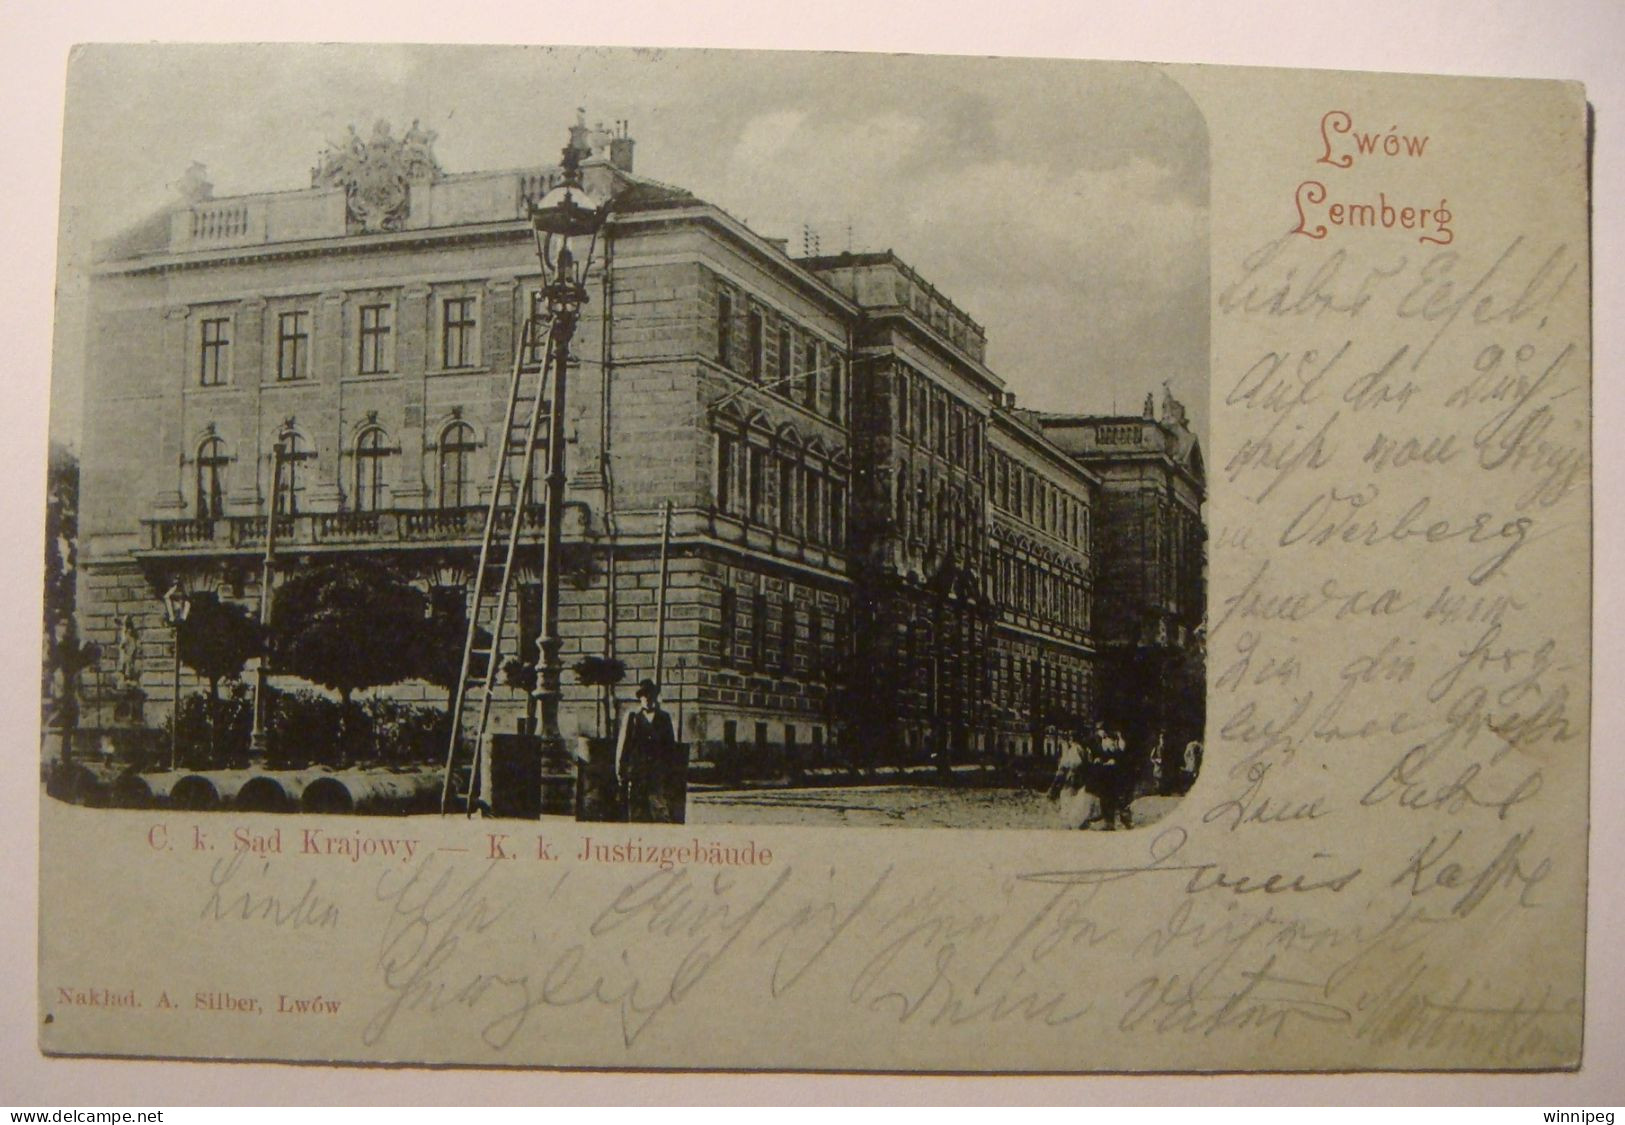 Lwow.Lemberg.C.k.Sad Krajowy.A Silber.1899.Iderberg,Bogumin.to Breslau.Poland.Ukraine - Ukraine